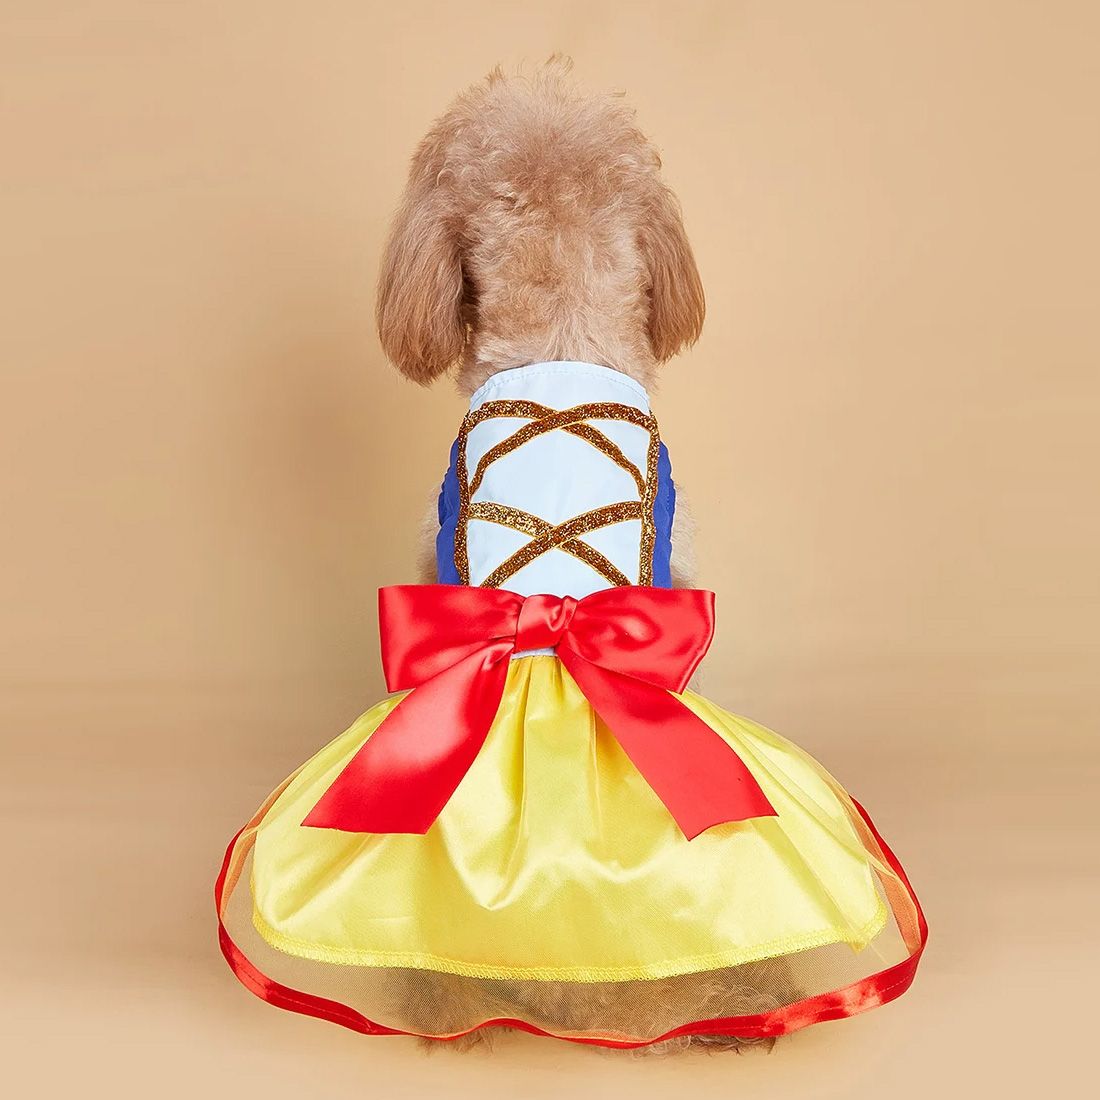 snow white dog costume